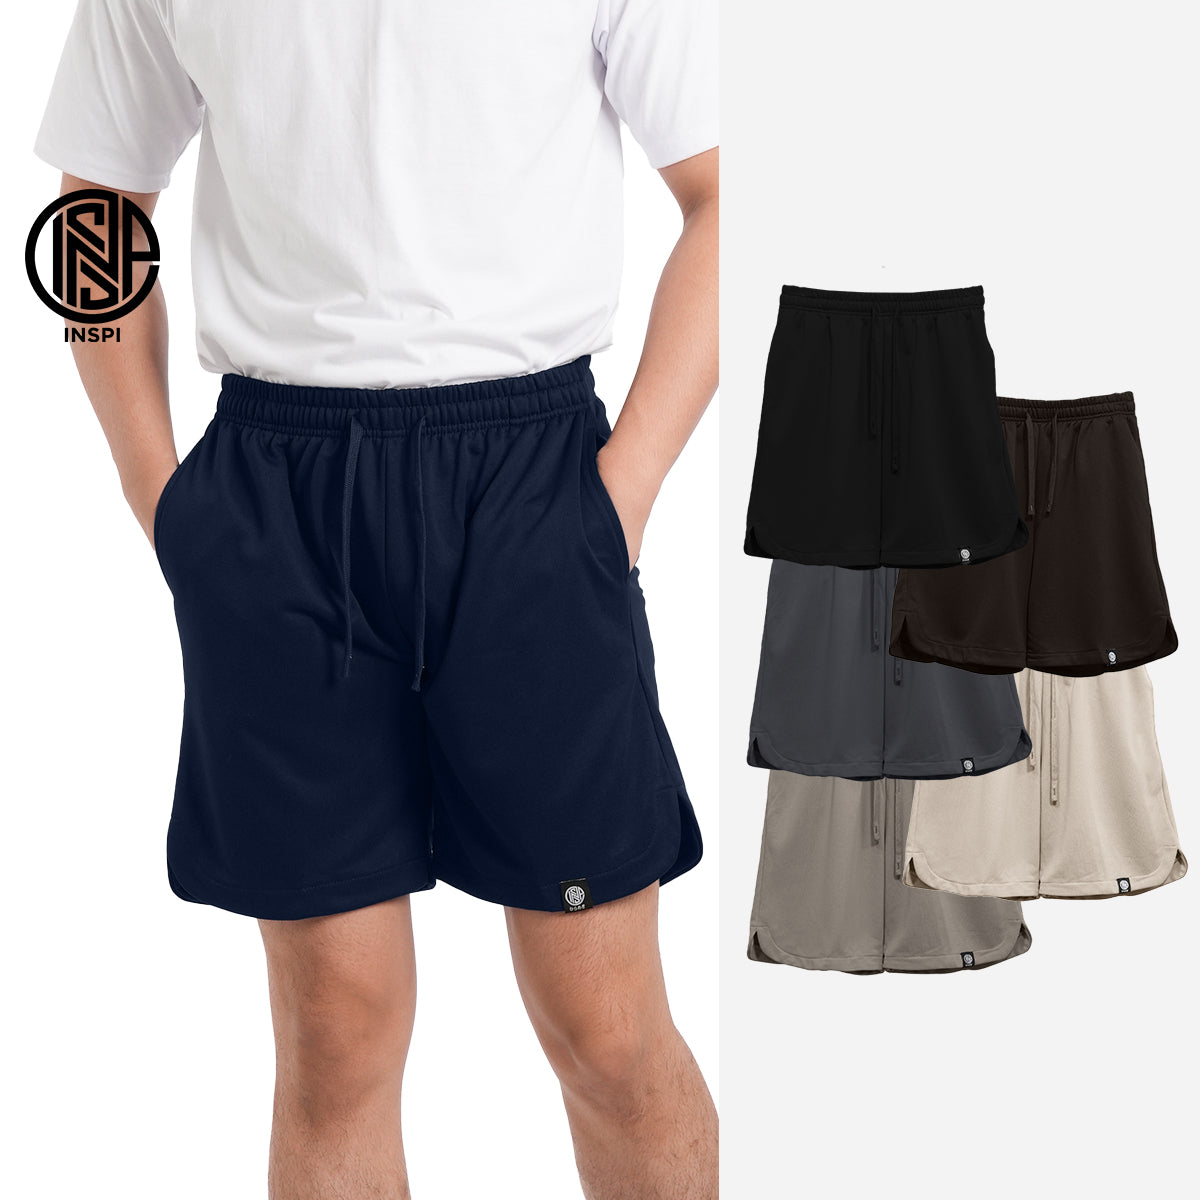 INSPI Knit Walking Shorts Black